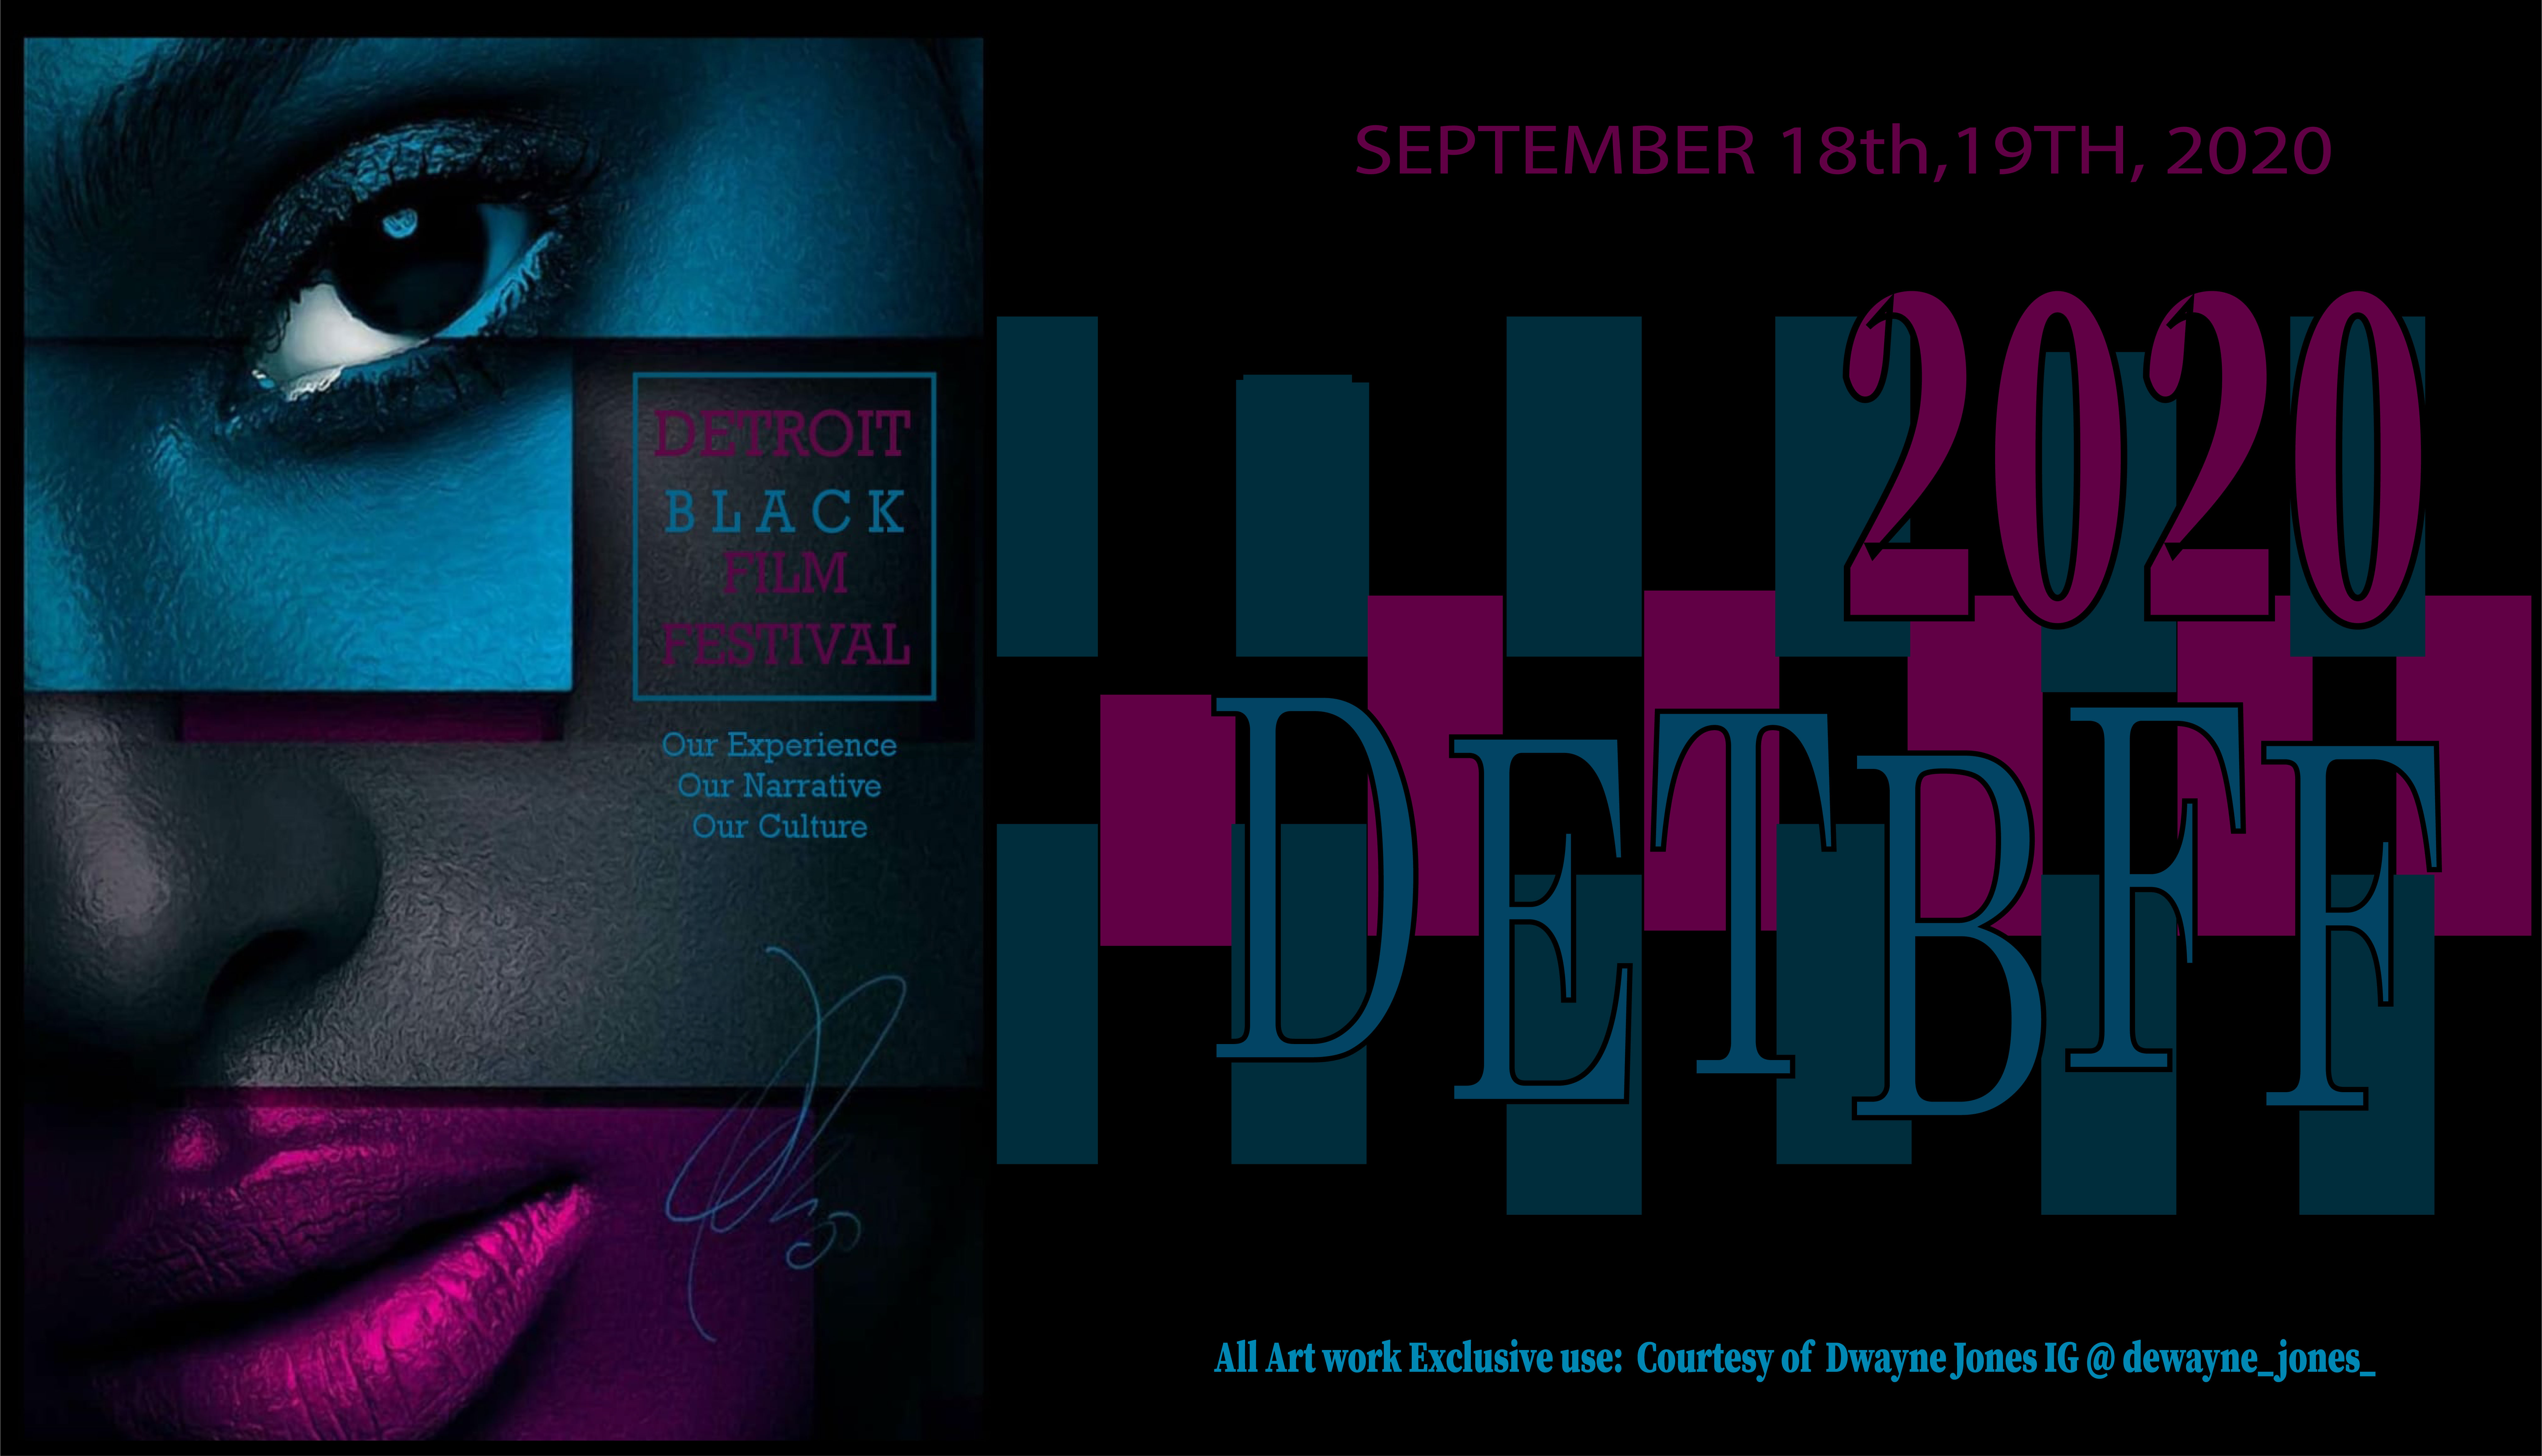 DETROIT BLACK FILM FESTIVAL (The Inaugural)